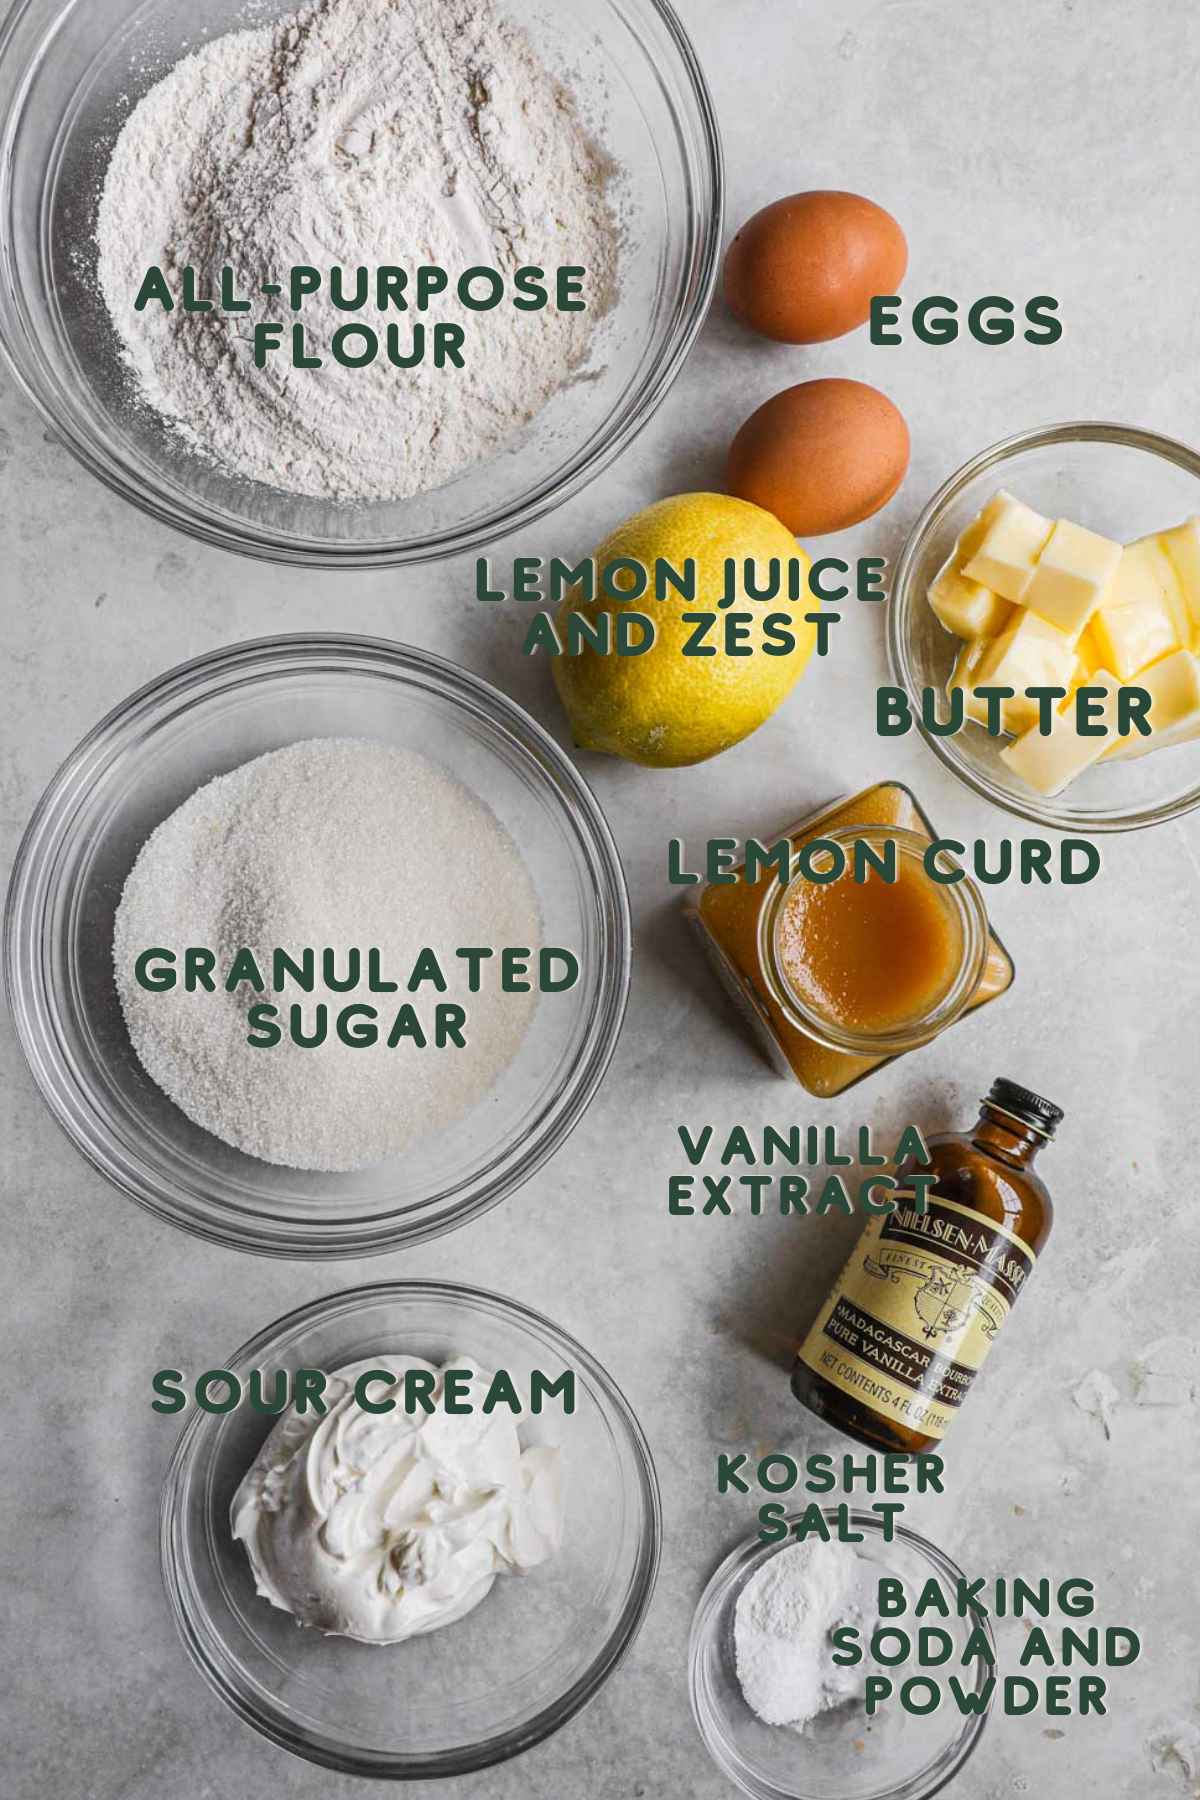 Ingredients to make lemon curd coffee cake, flour, sugar, eggs, lemon juice and zest, butter, lemon curd, vanilla extract, sour cream, baking soda and powder.